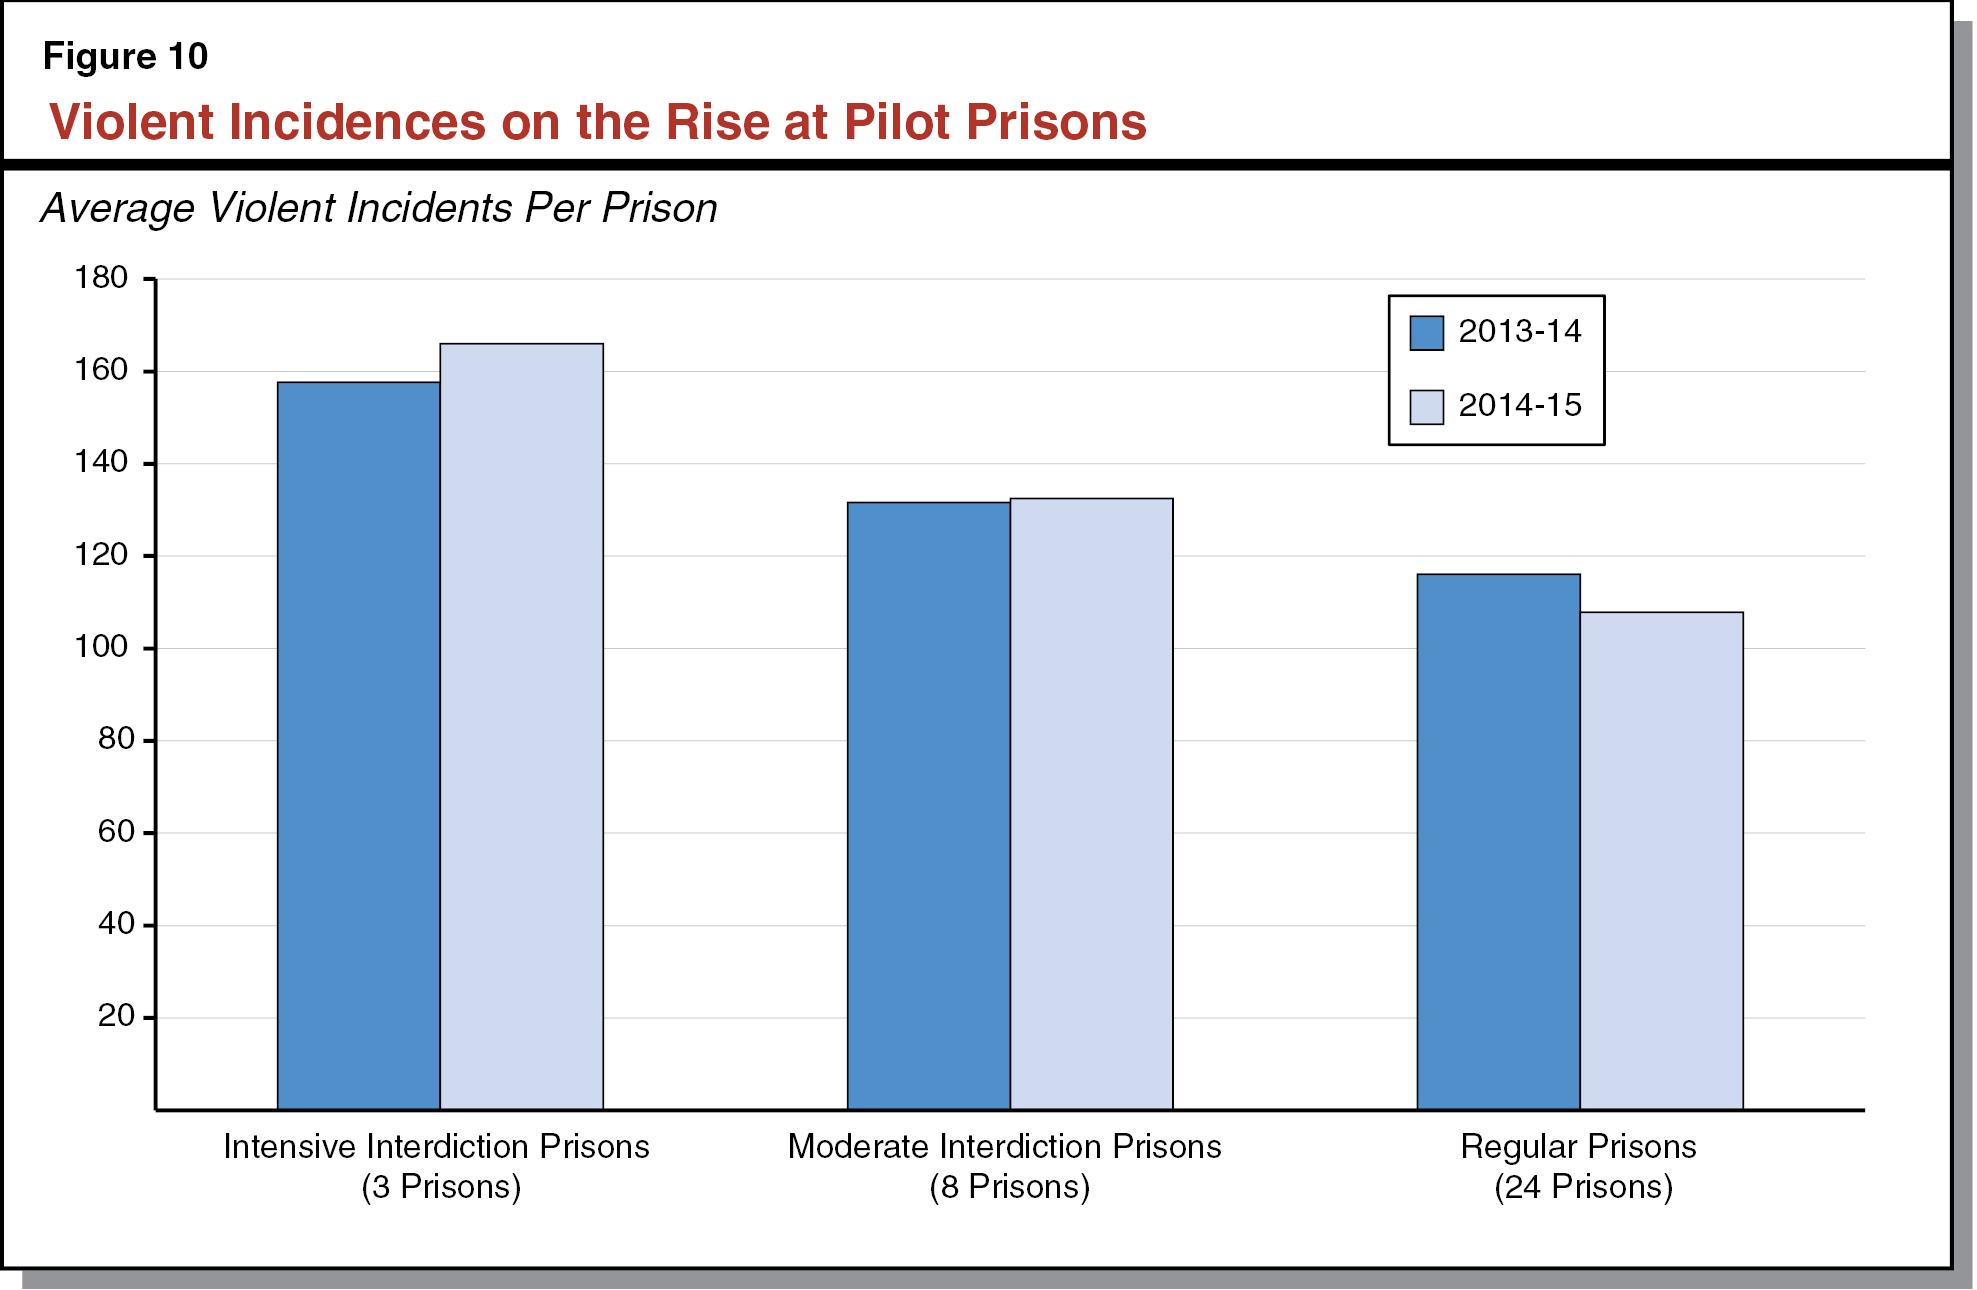 Figure 10 - Violent Incidences on the Rise at Pilot Prisons